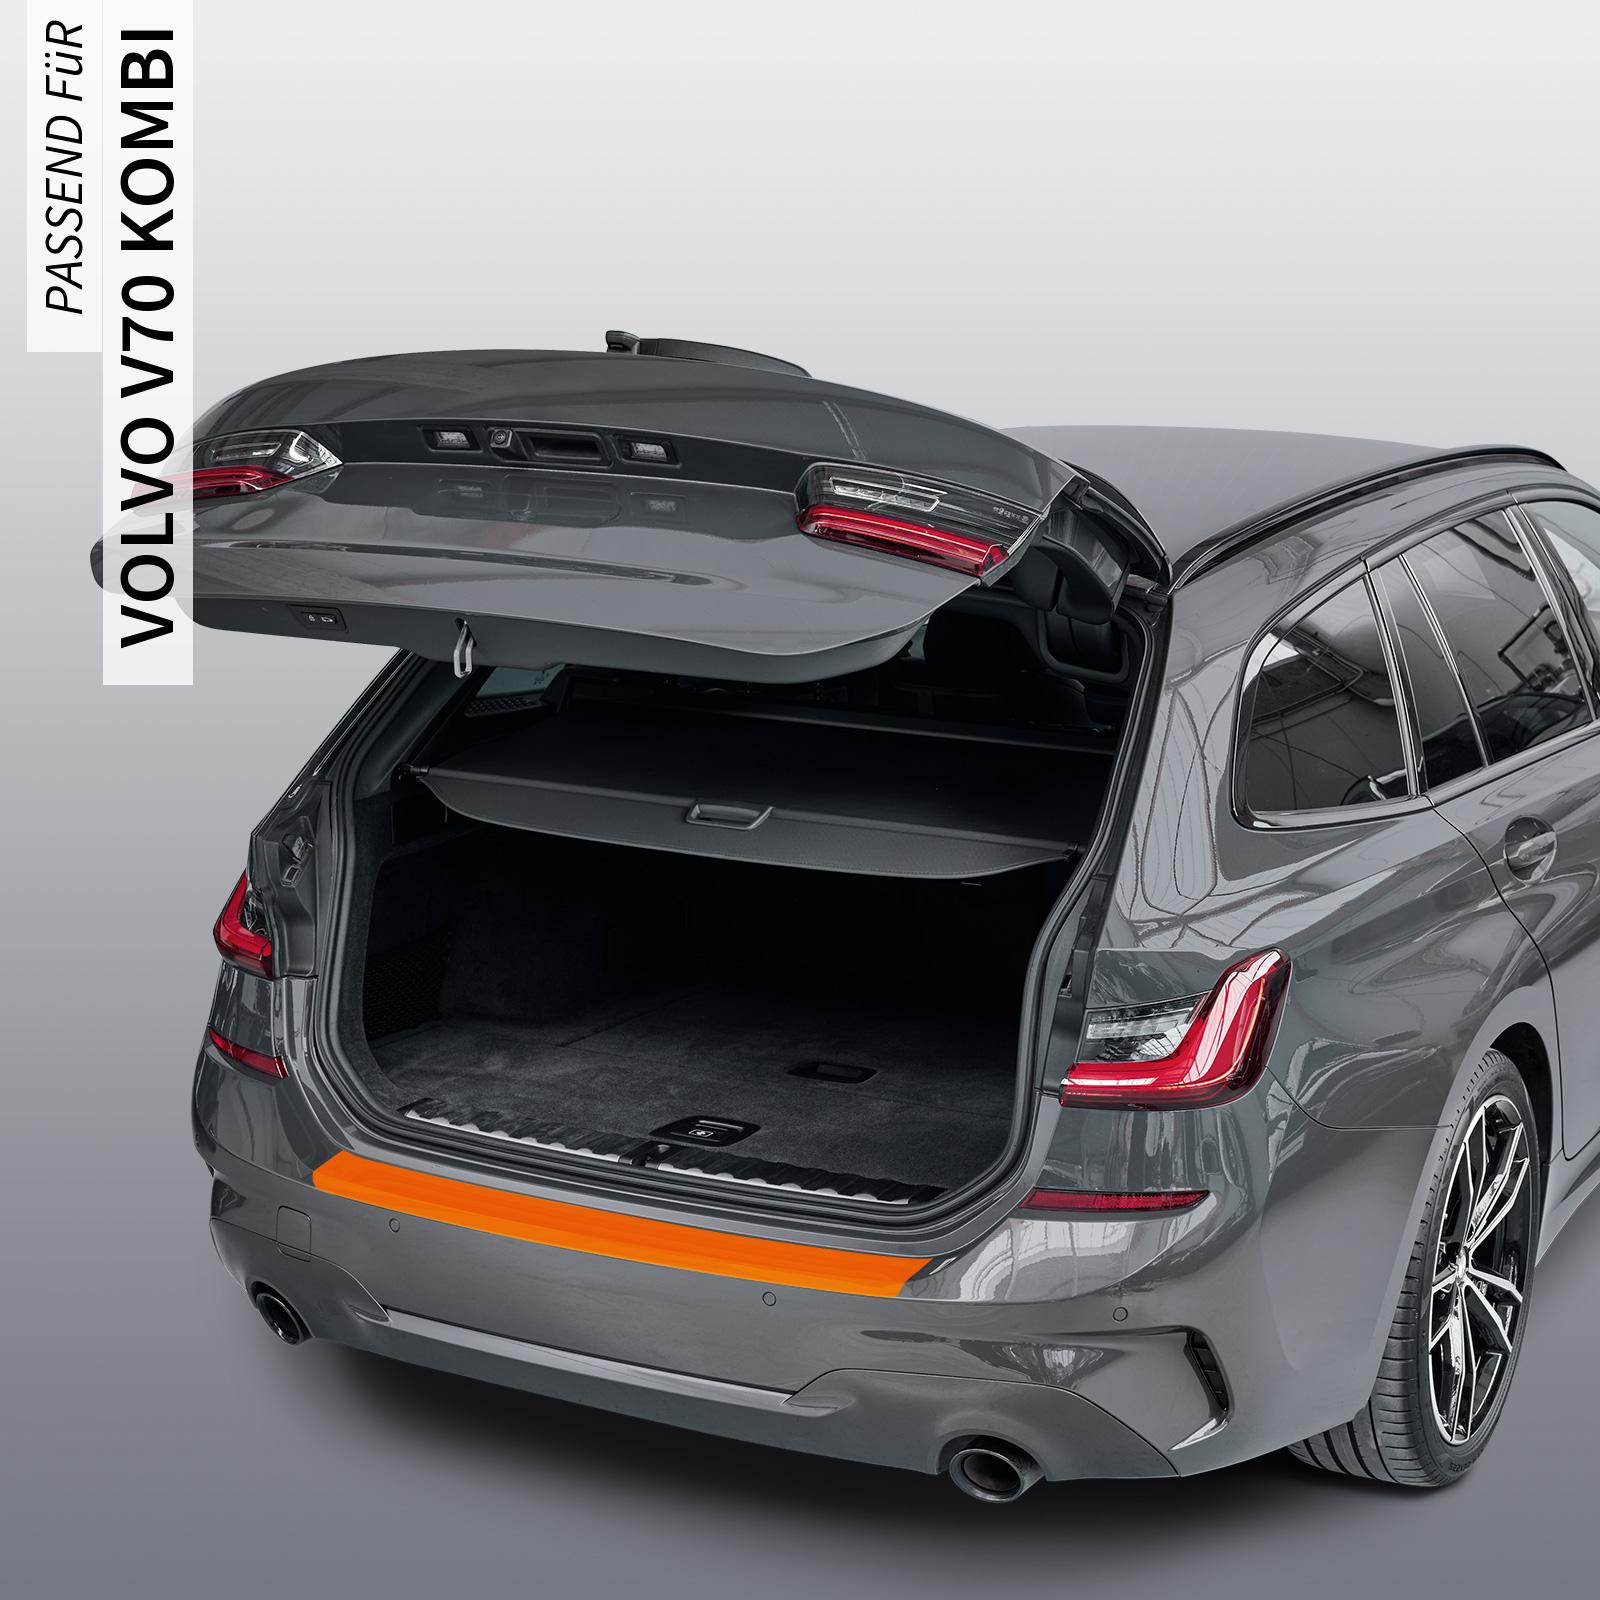 Ladekantenschutzfolie - Transparent Glatt Hochglänzend 150 µm stark für Volvo V70 Kombi Typ B, Facelift BJ 2013-2016